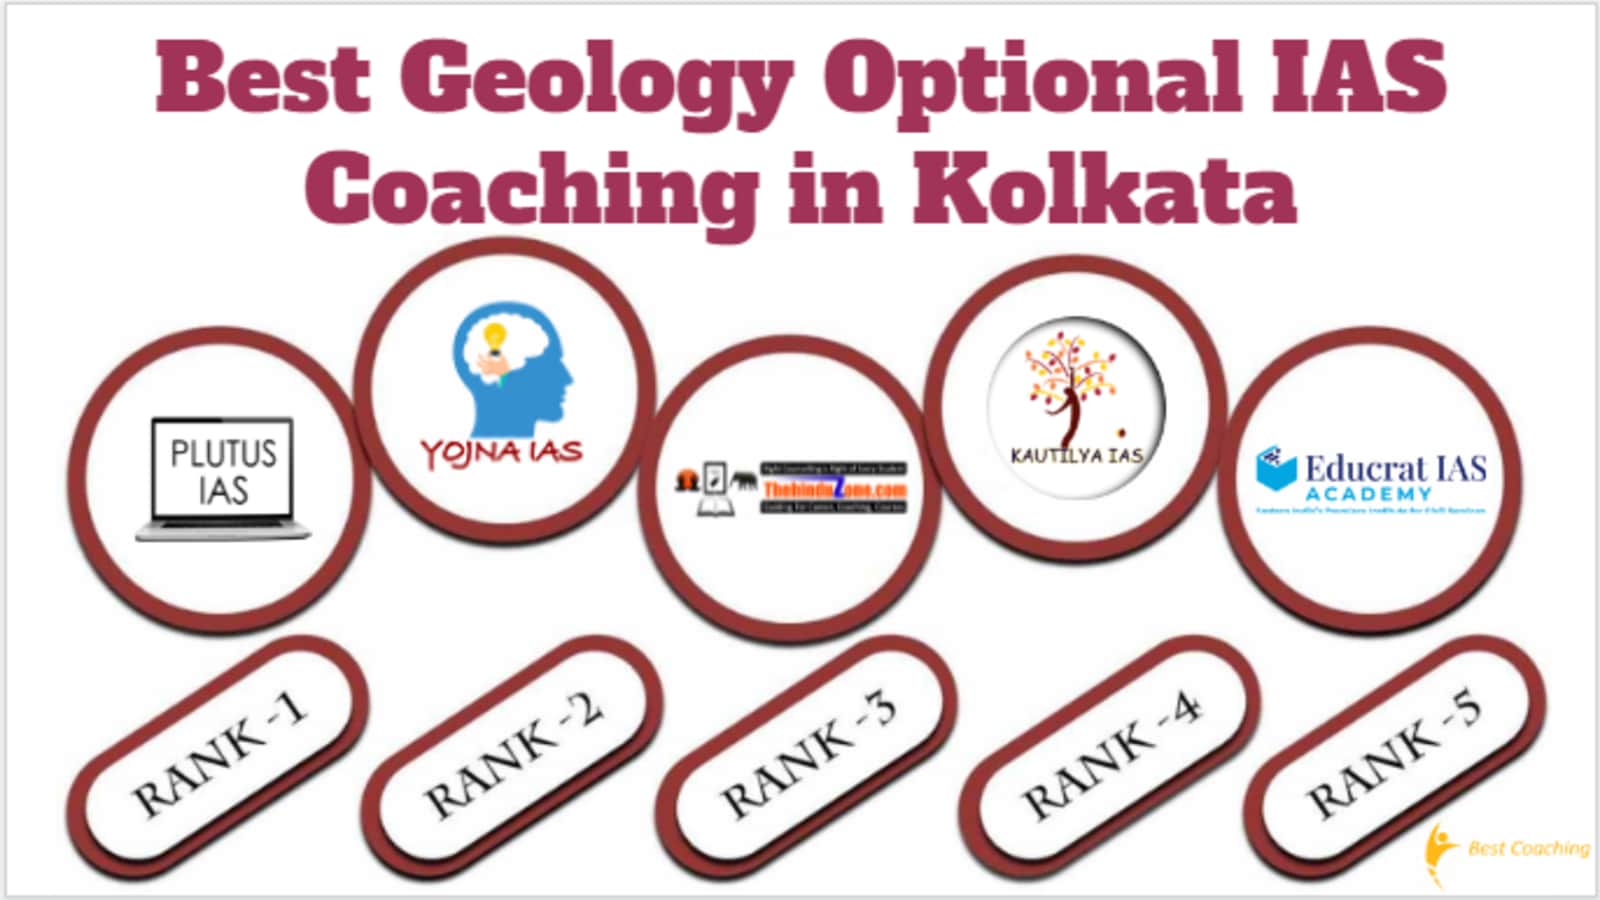 Best Geology Optional IAS Coaching in Kolkata